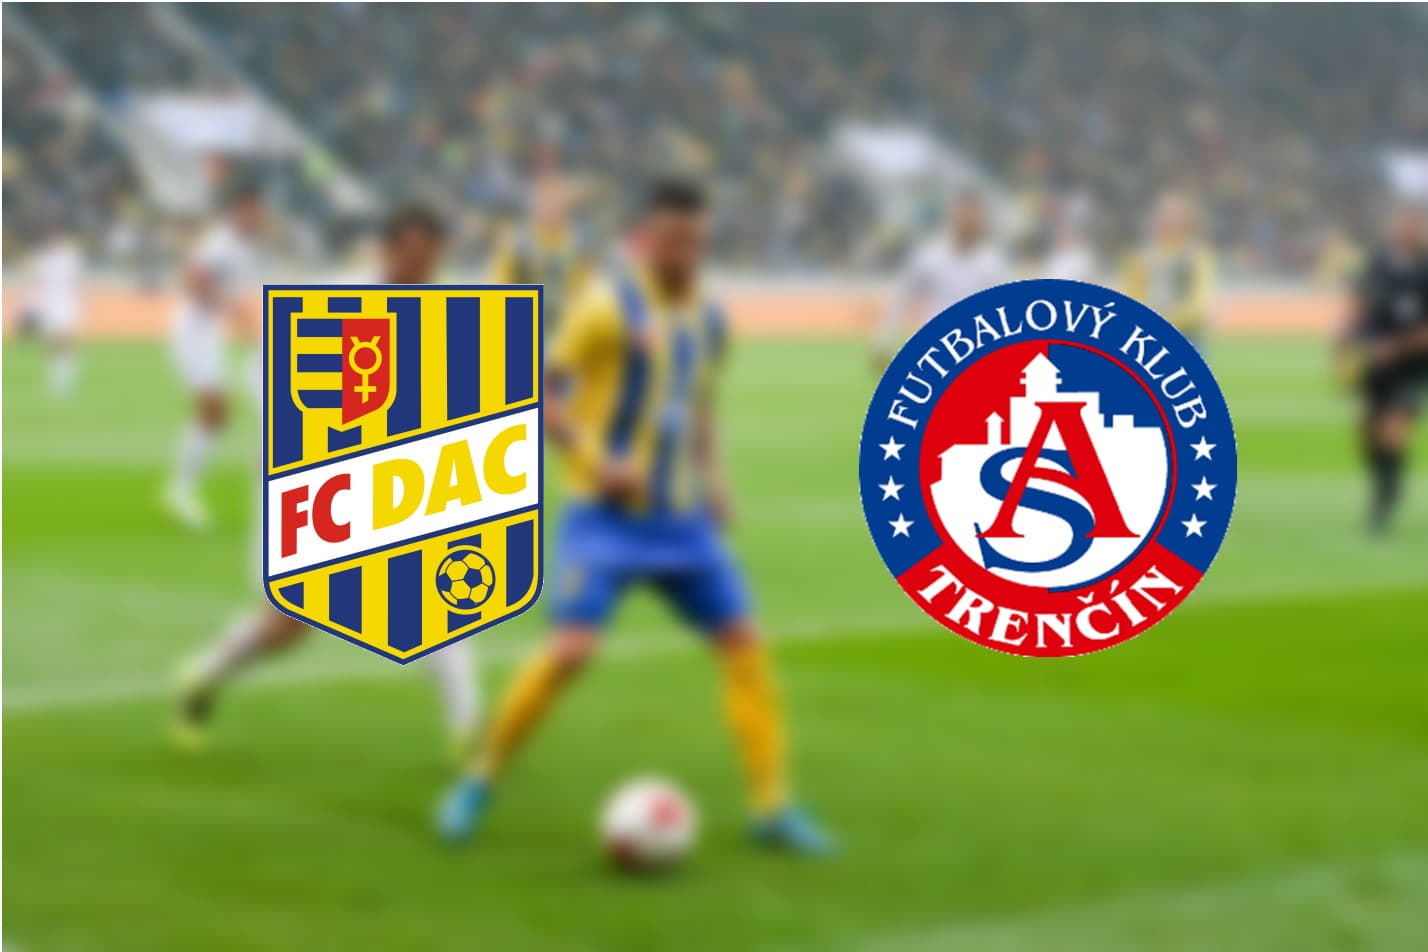 Fortuna Liga: FC DAC 1904 – AS Trenčín 0:3 (ÉLŐ)